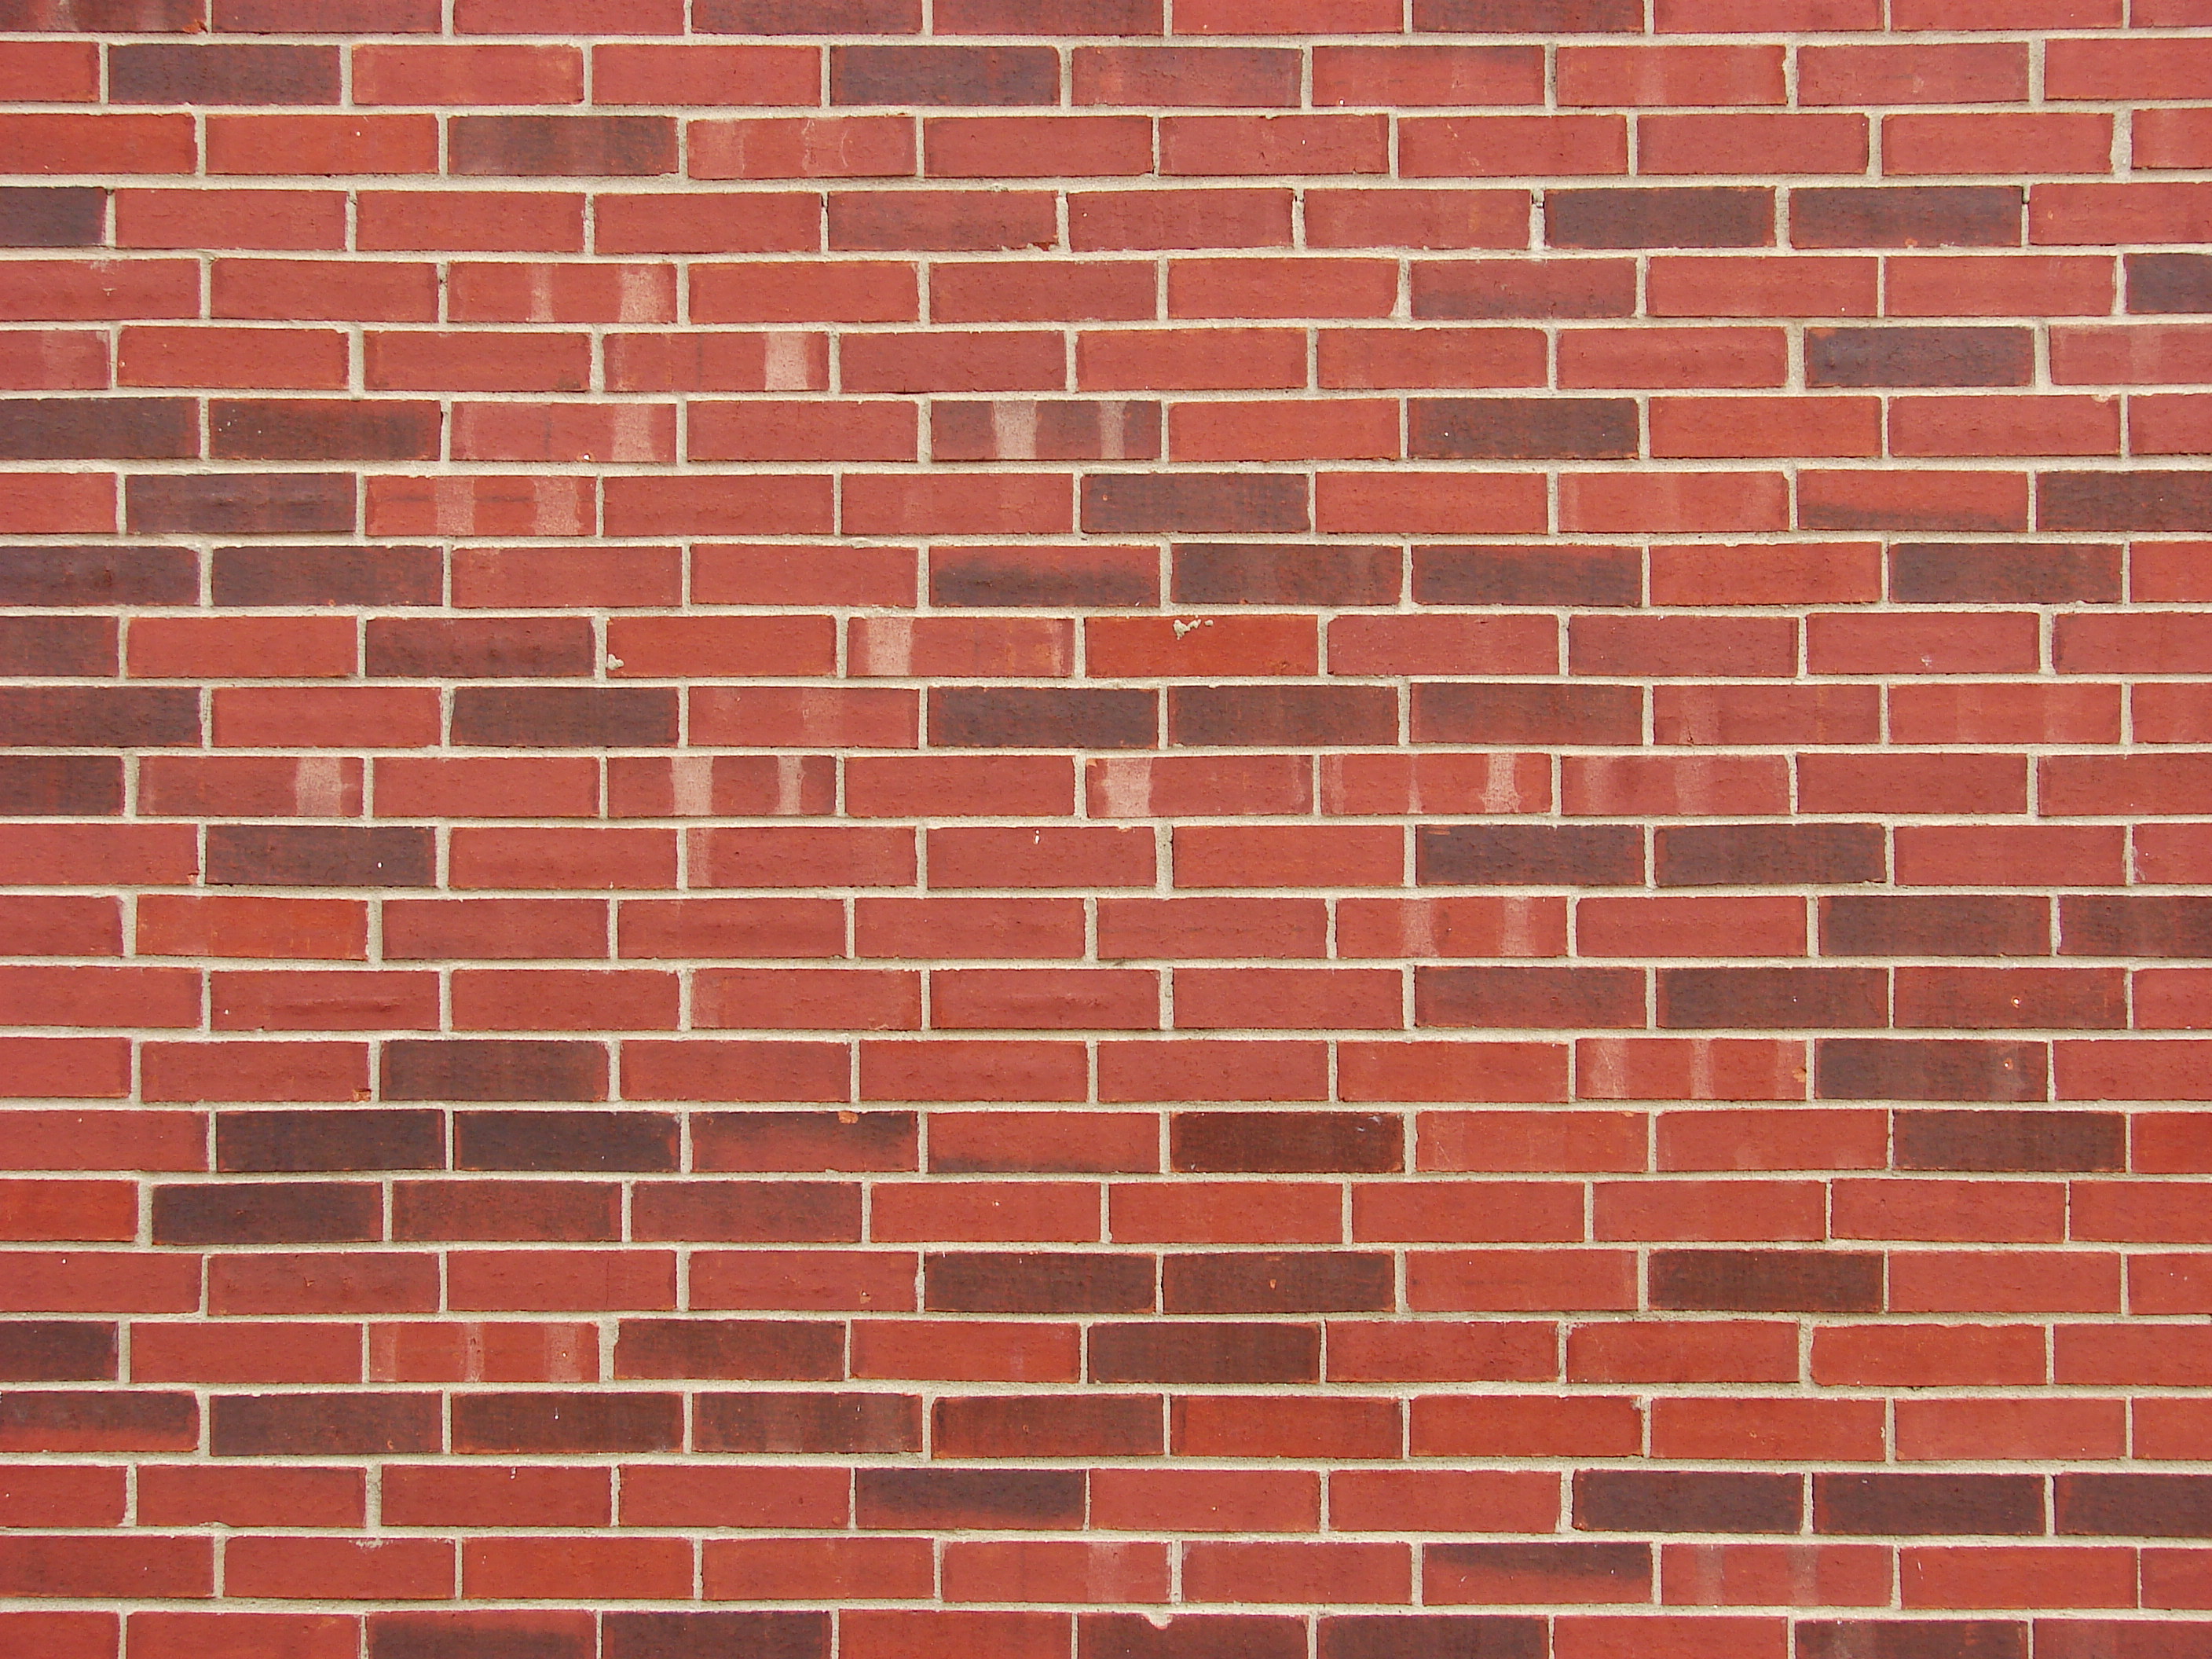 File:Bricks-4147.jpg - Wikimedia Commons